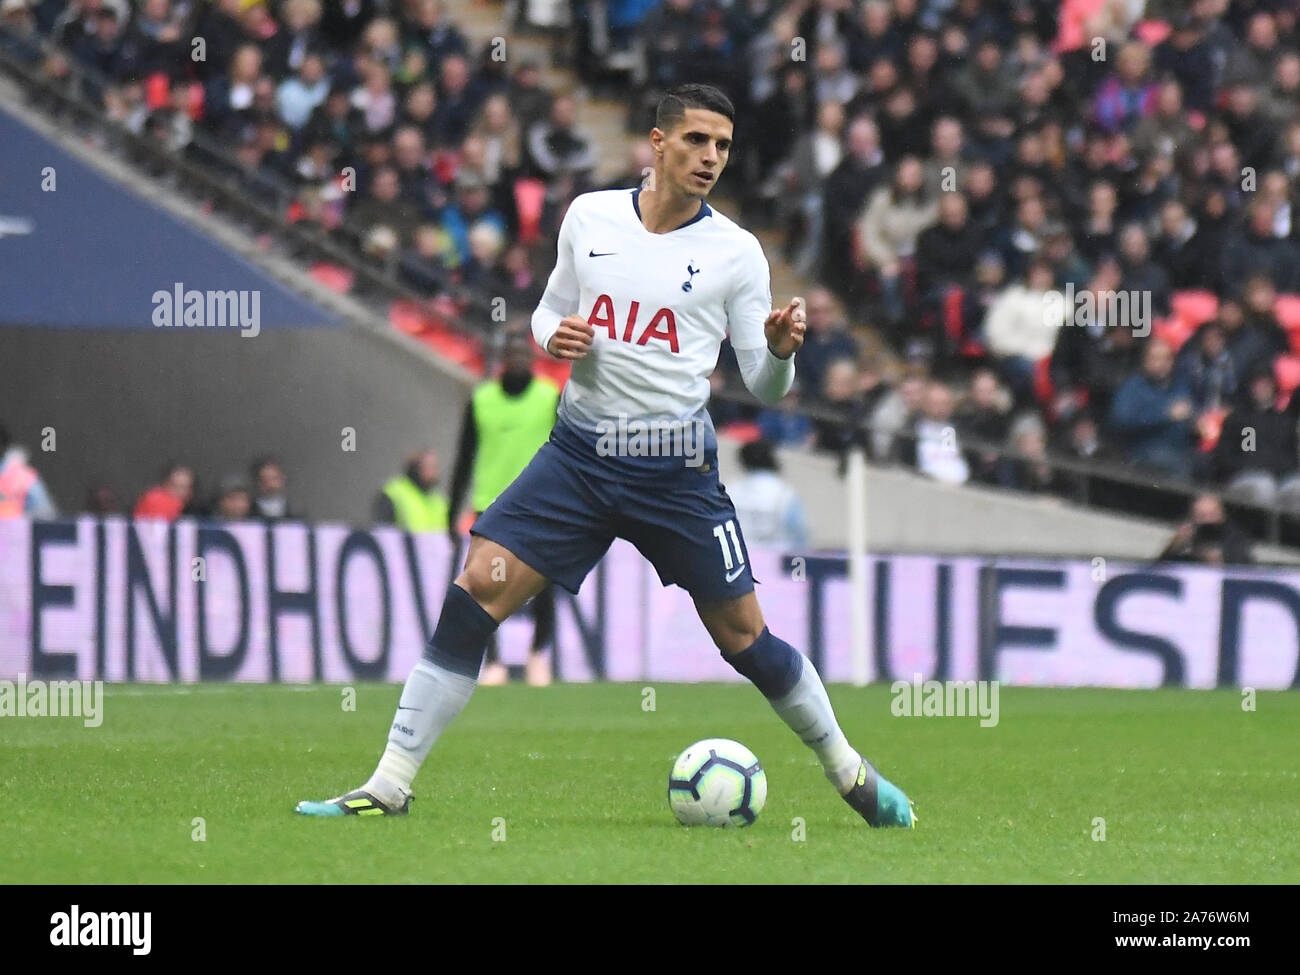 Londra, Inghilterra - Ottobre 6, 2018: Erik Lamela di Tottenham mostrato durante il 2018/19 English Premier League tra Tottenham Hotspur e Cardiff City a Wembley Stadium. Foto Stock